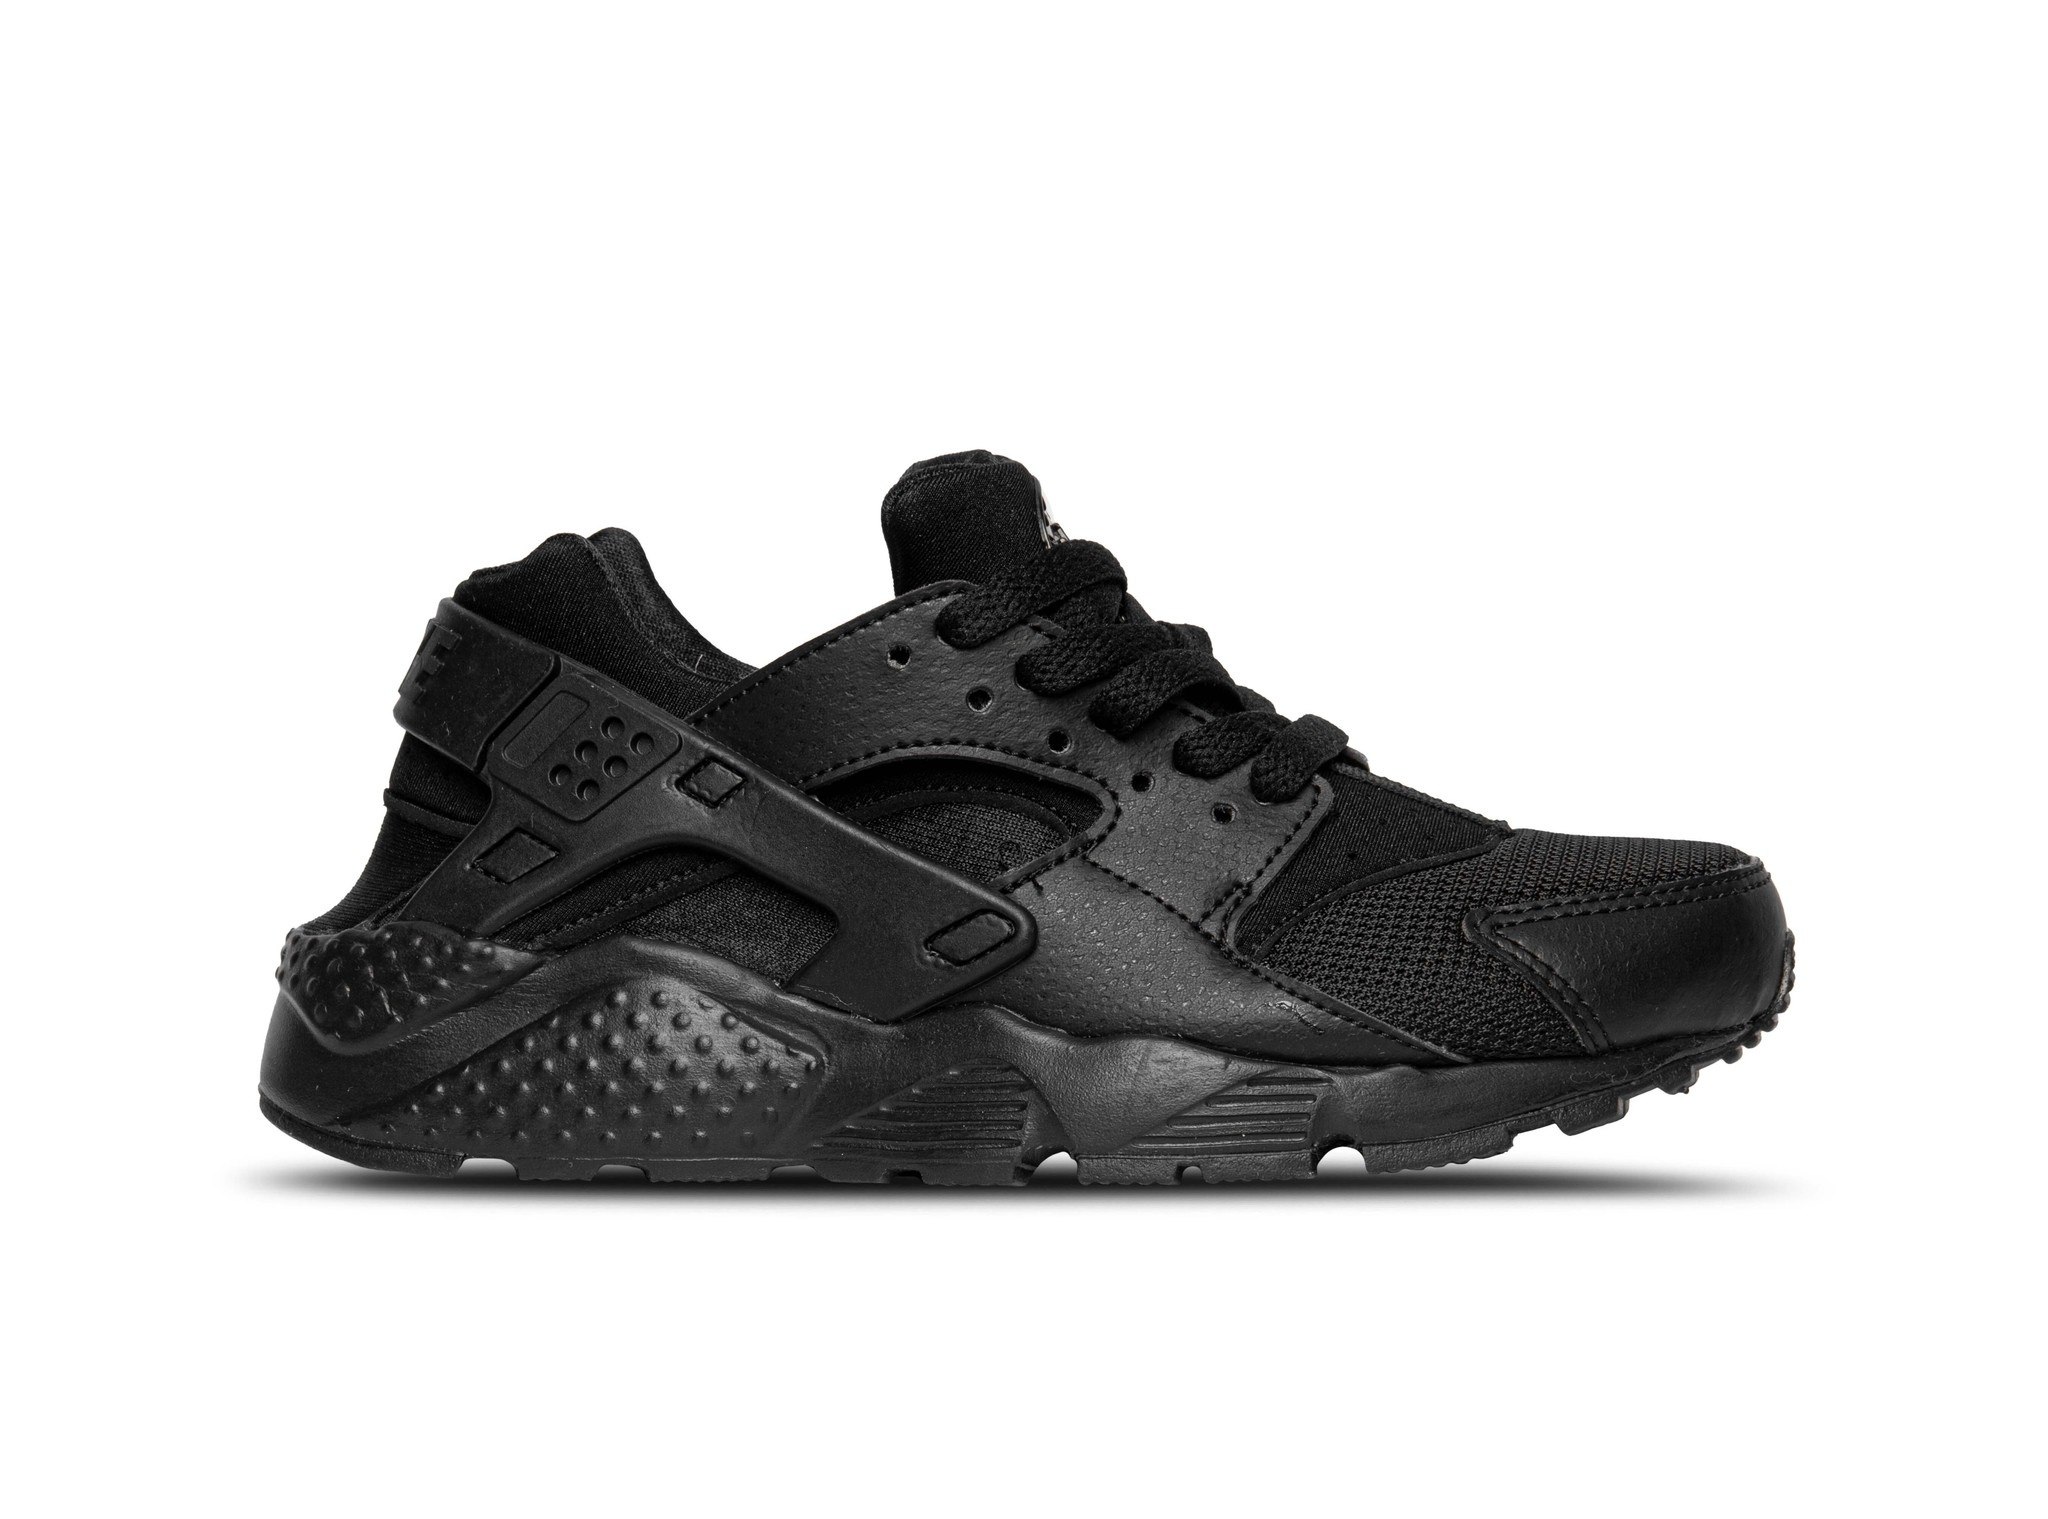 Goederen Electrificeren uitspraak Nike Huarache Run PS Black Black 704949 016 | Bruut Online Shop - Bruut